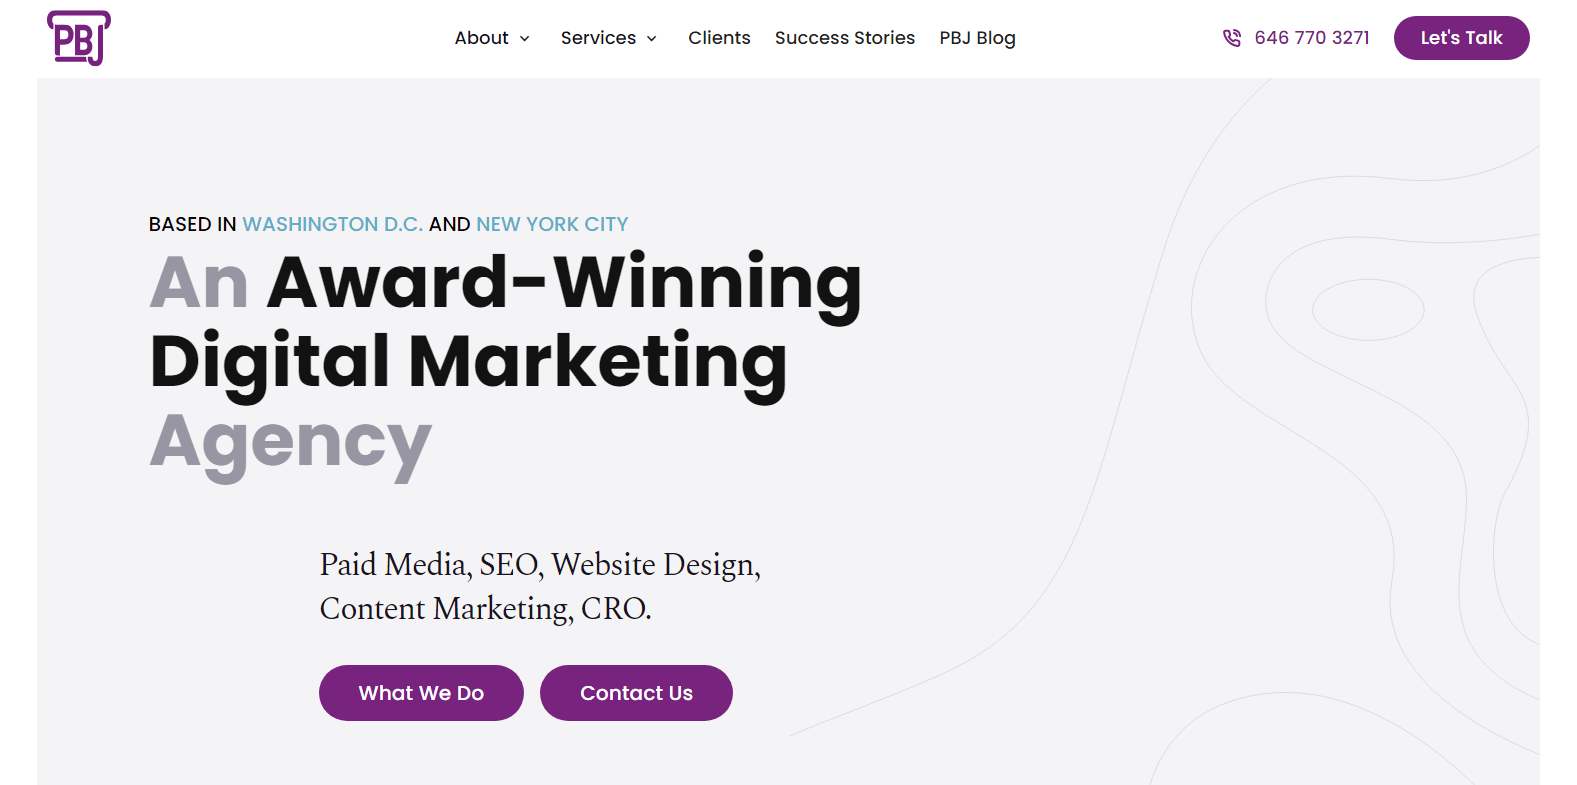 PBJ Marketing: An Award-Winning Digital Marketing Agency